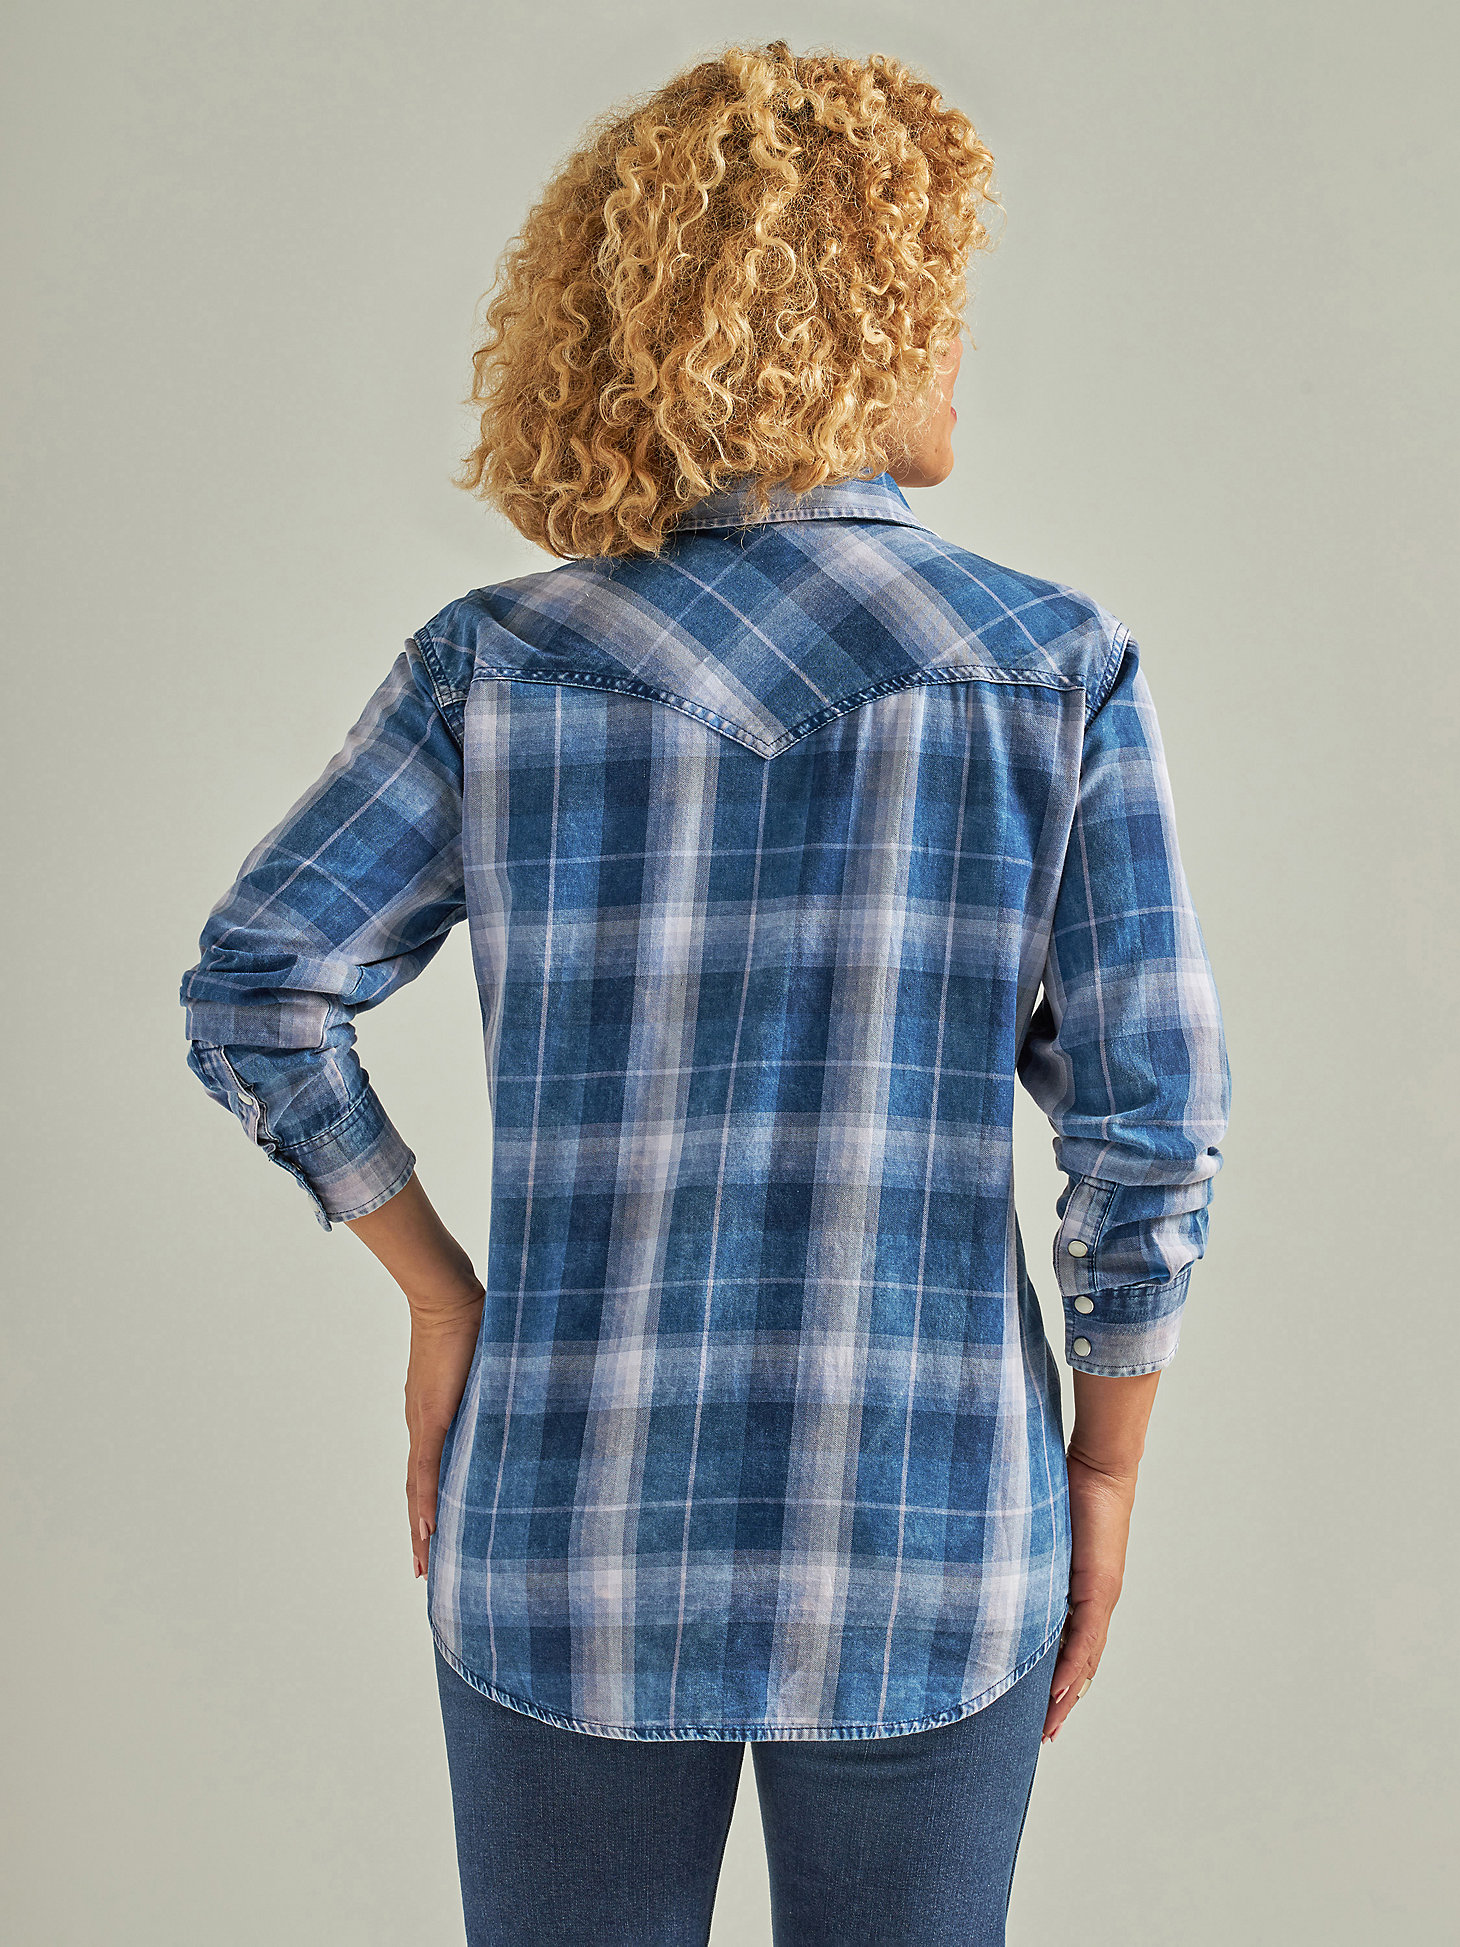 Women's Wrangler Long Sleeve Western Snap Plaid Denim Shirt in Blue Plaid alternative view 2